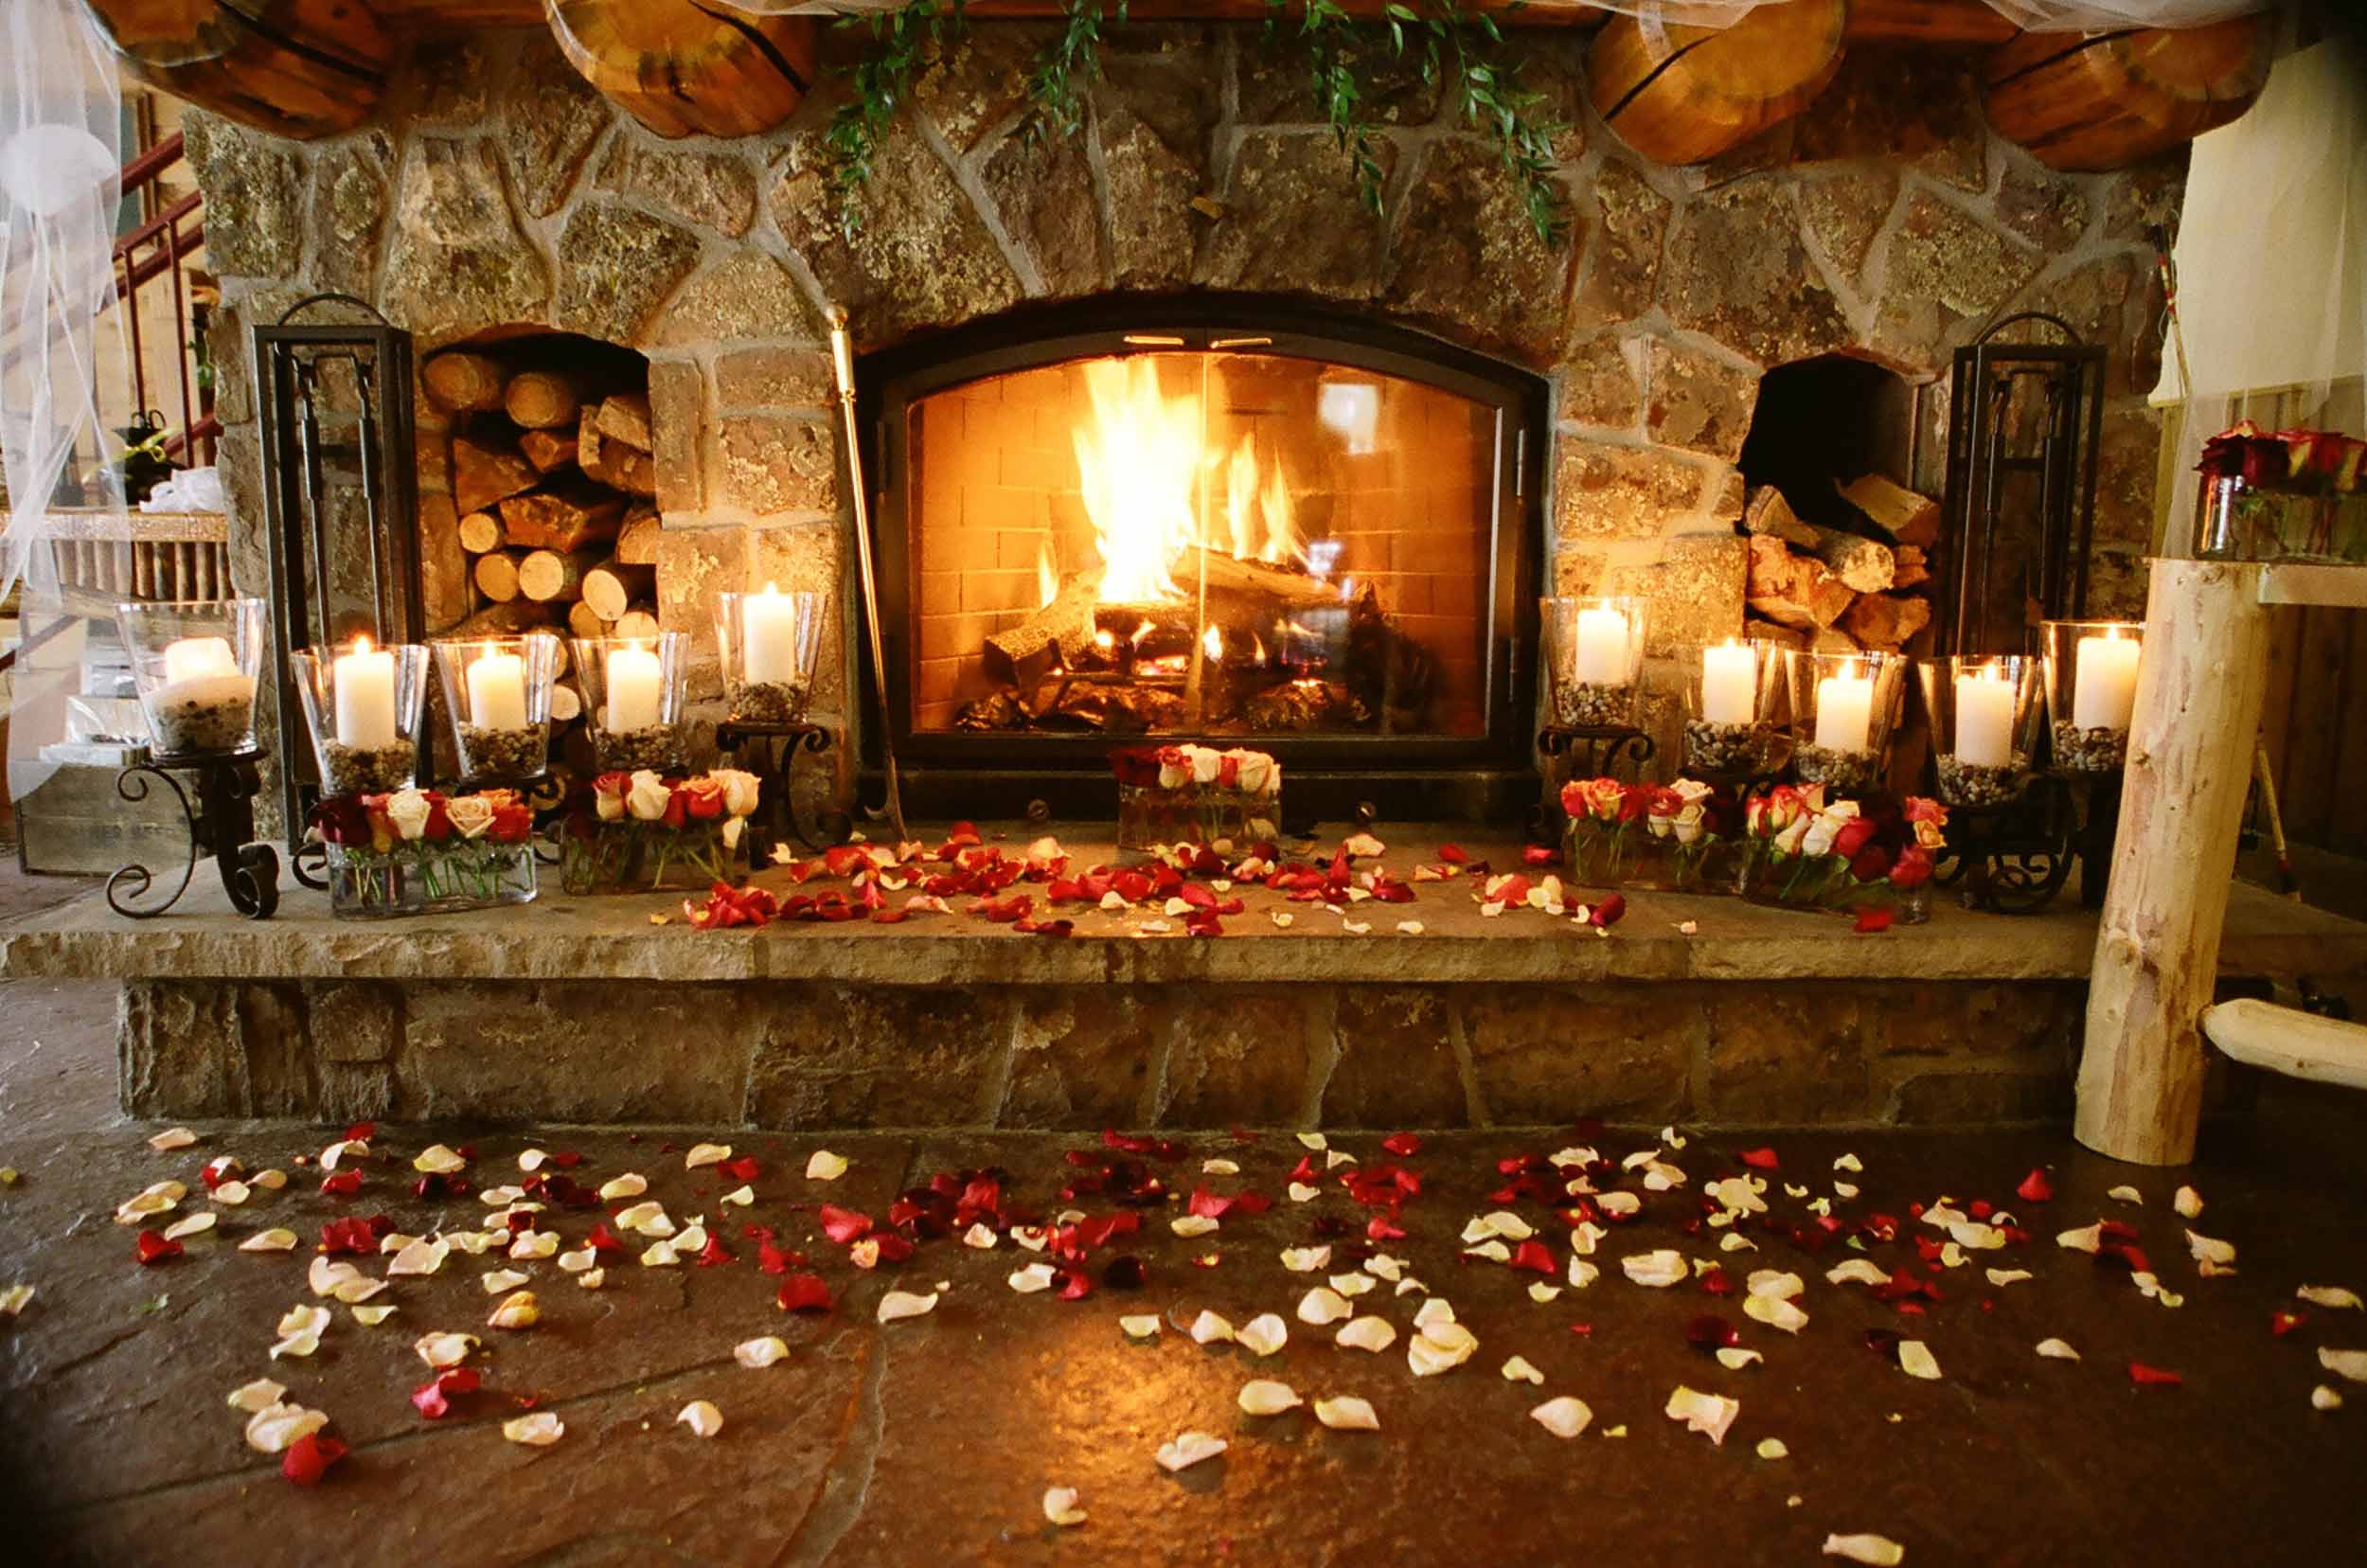 Romantic Fireplace Wallpaper.